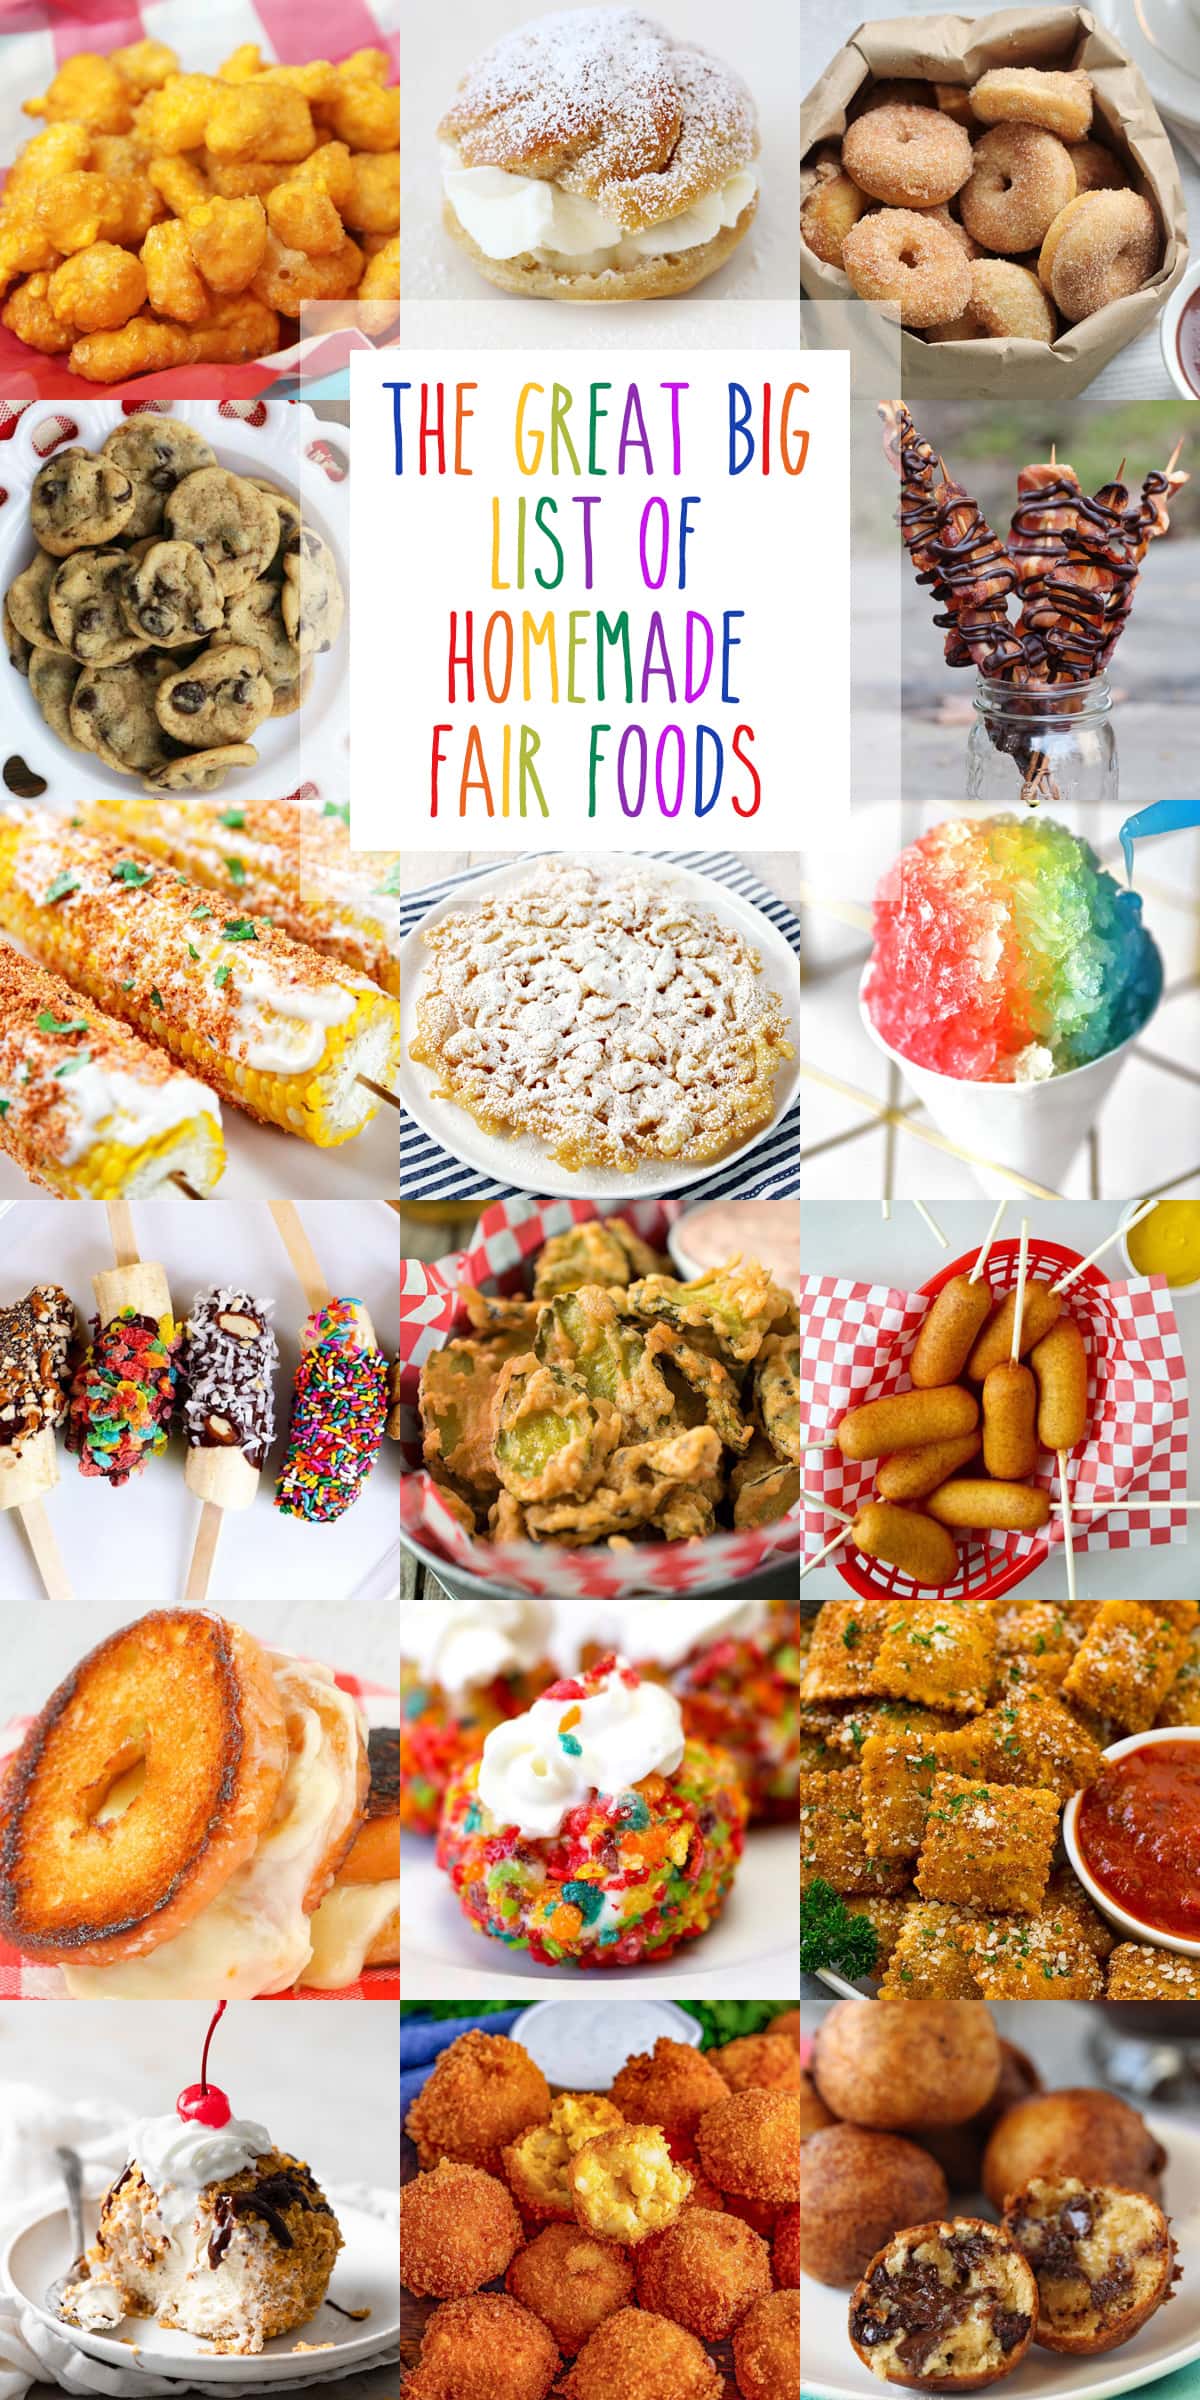 https://sarahsbakestudio.com/wp-content/uploads/2022/08/The-Great-Big-List-of-Homemade-Fair-Foods.jpg